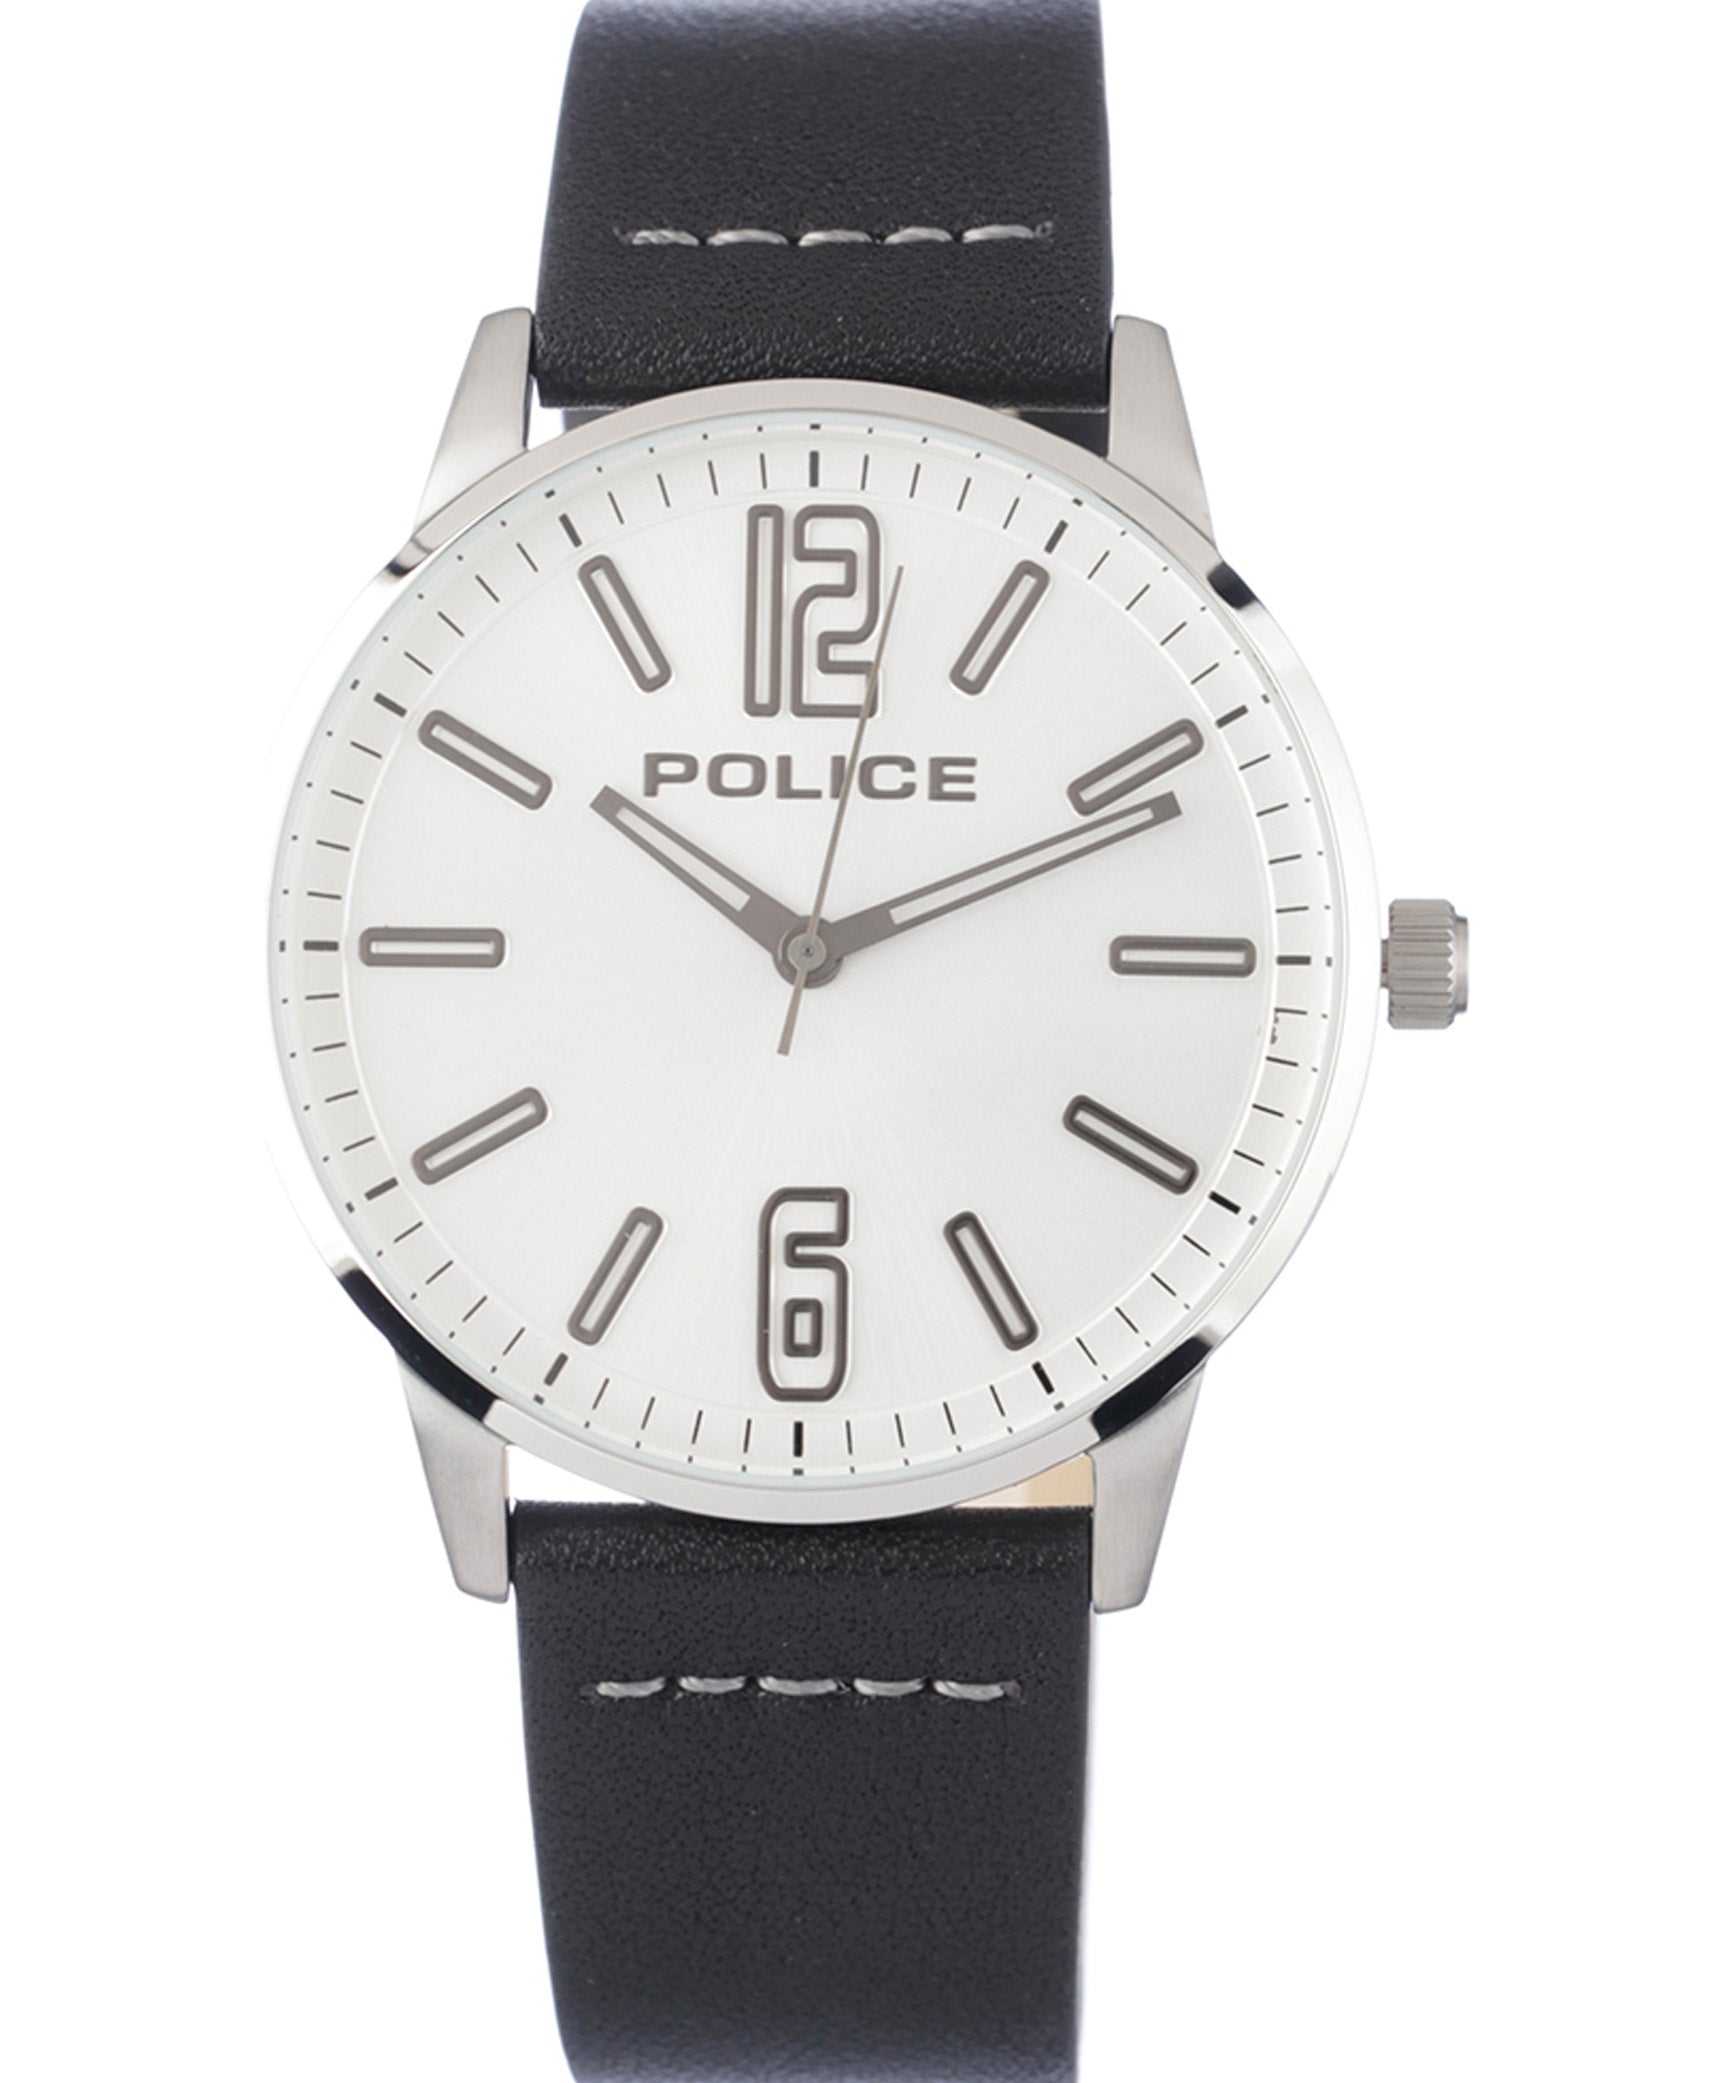 Police Men's Watch Analog, White Dial Black LeatherBand, P15142JS-04